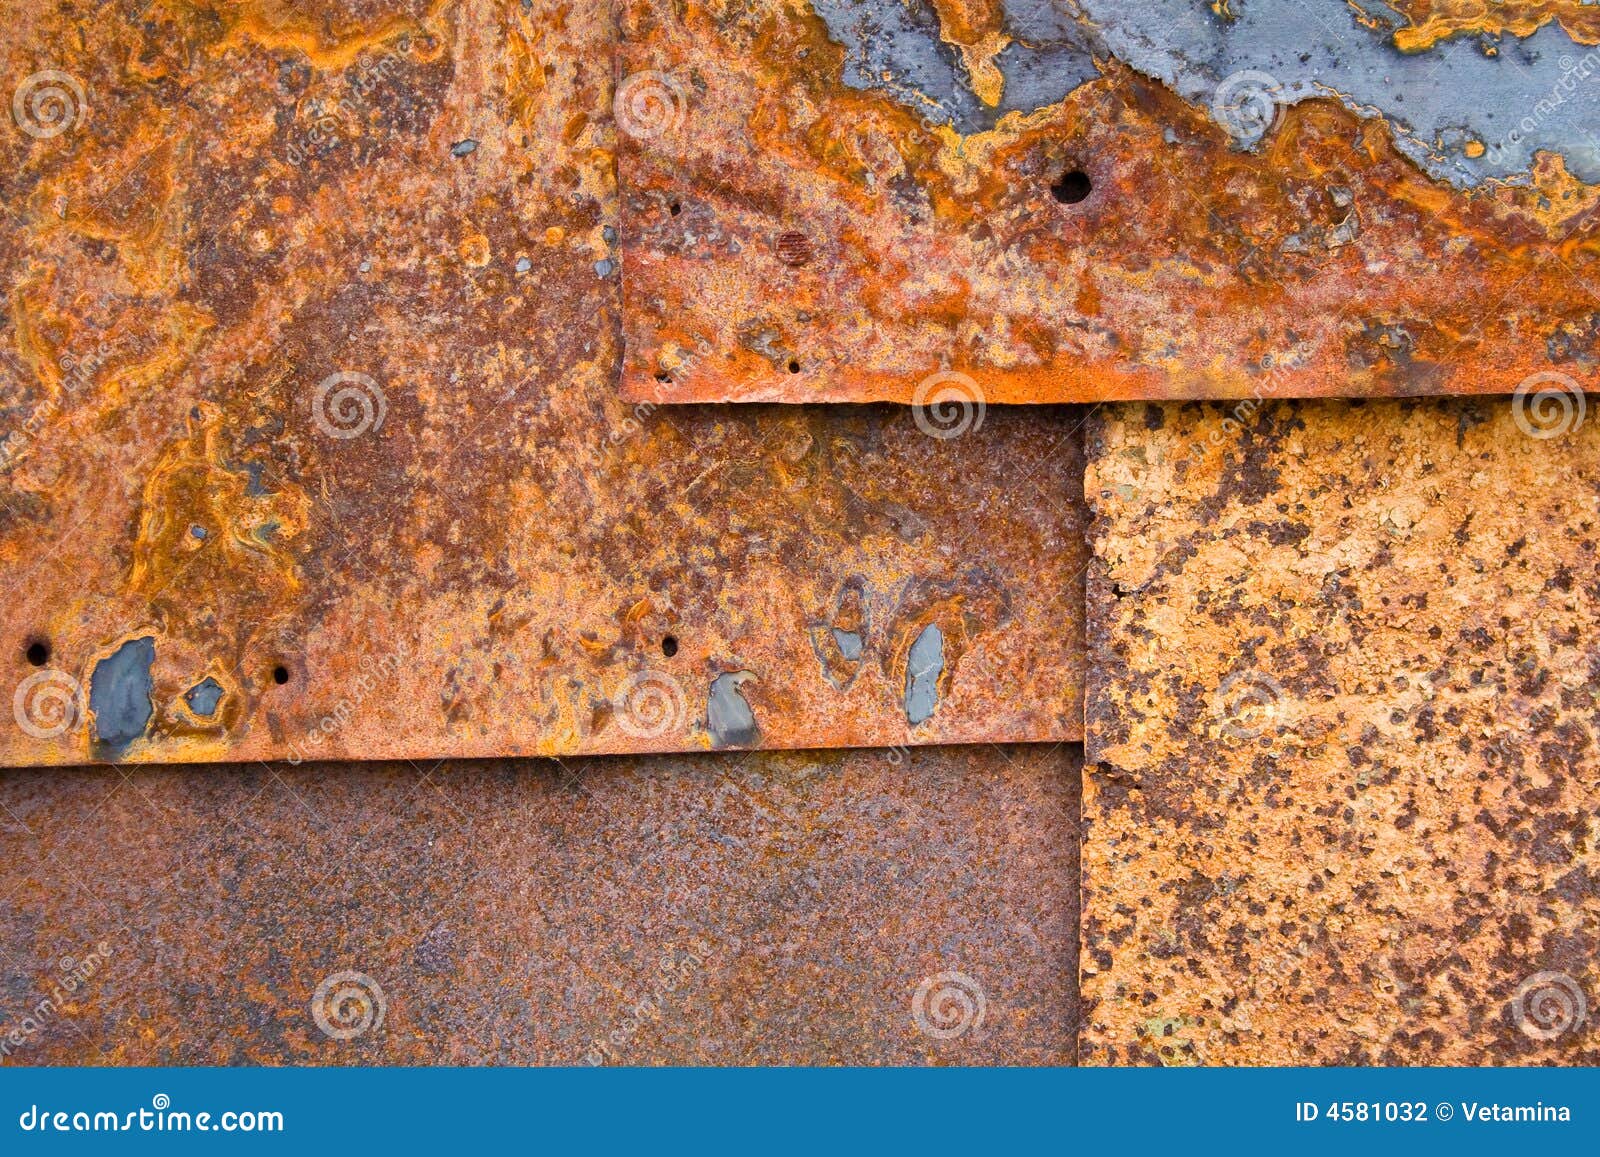 Can sheet metal rust фото 49